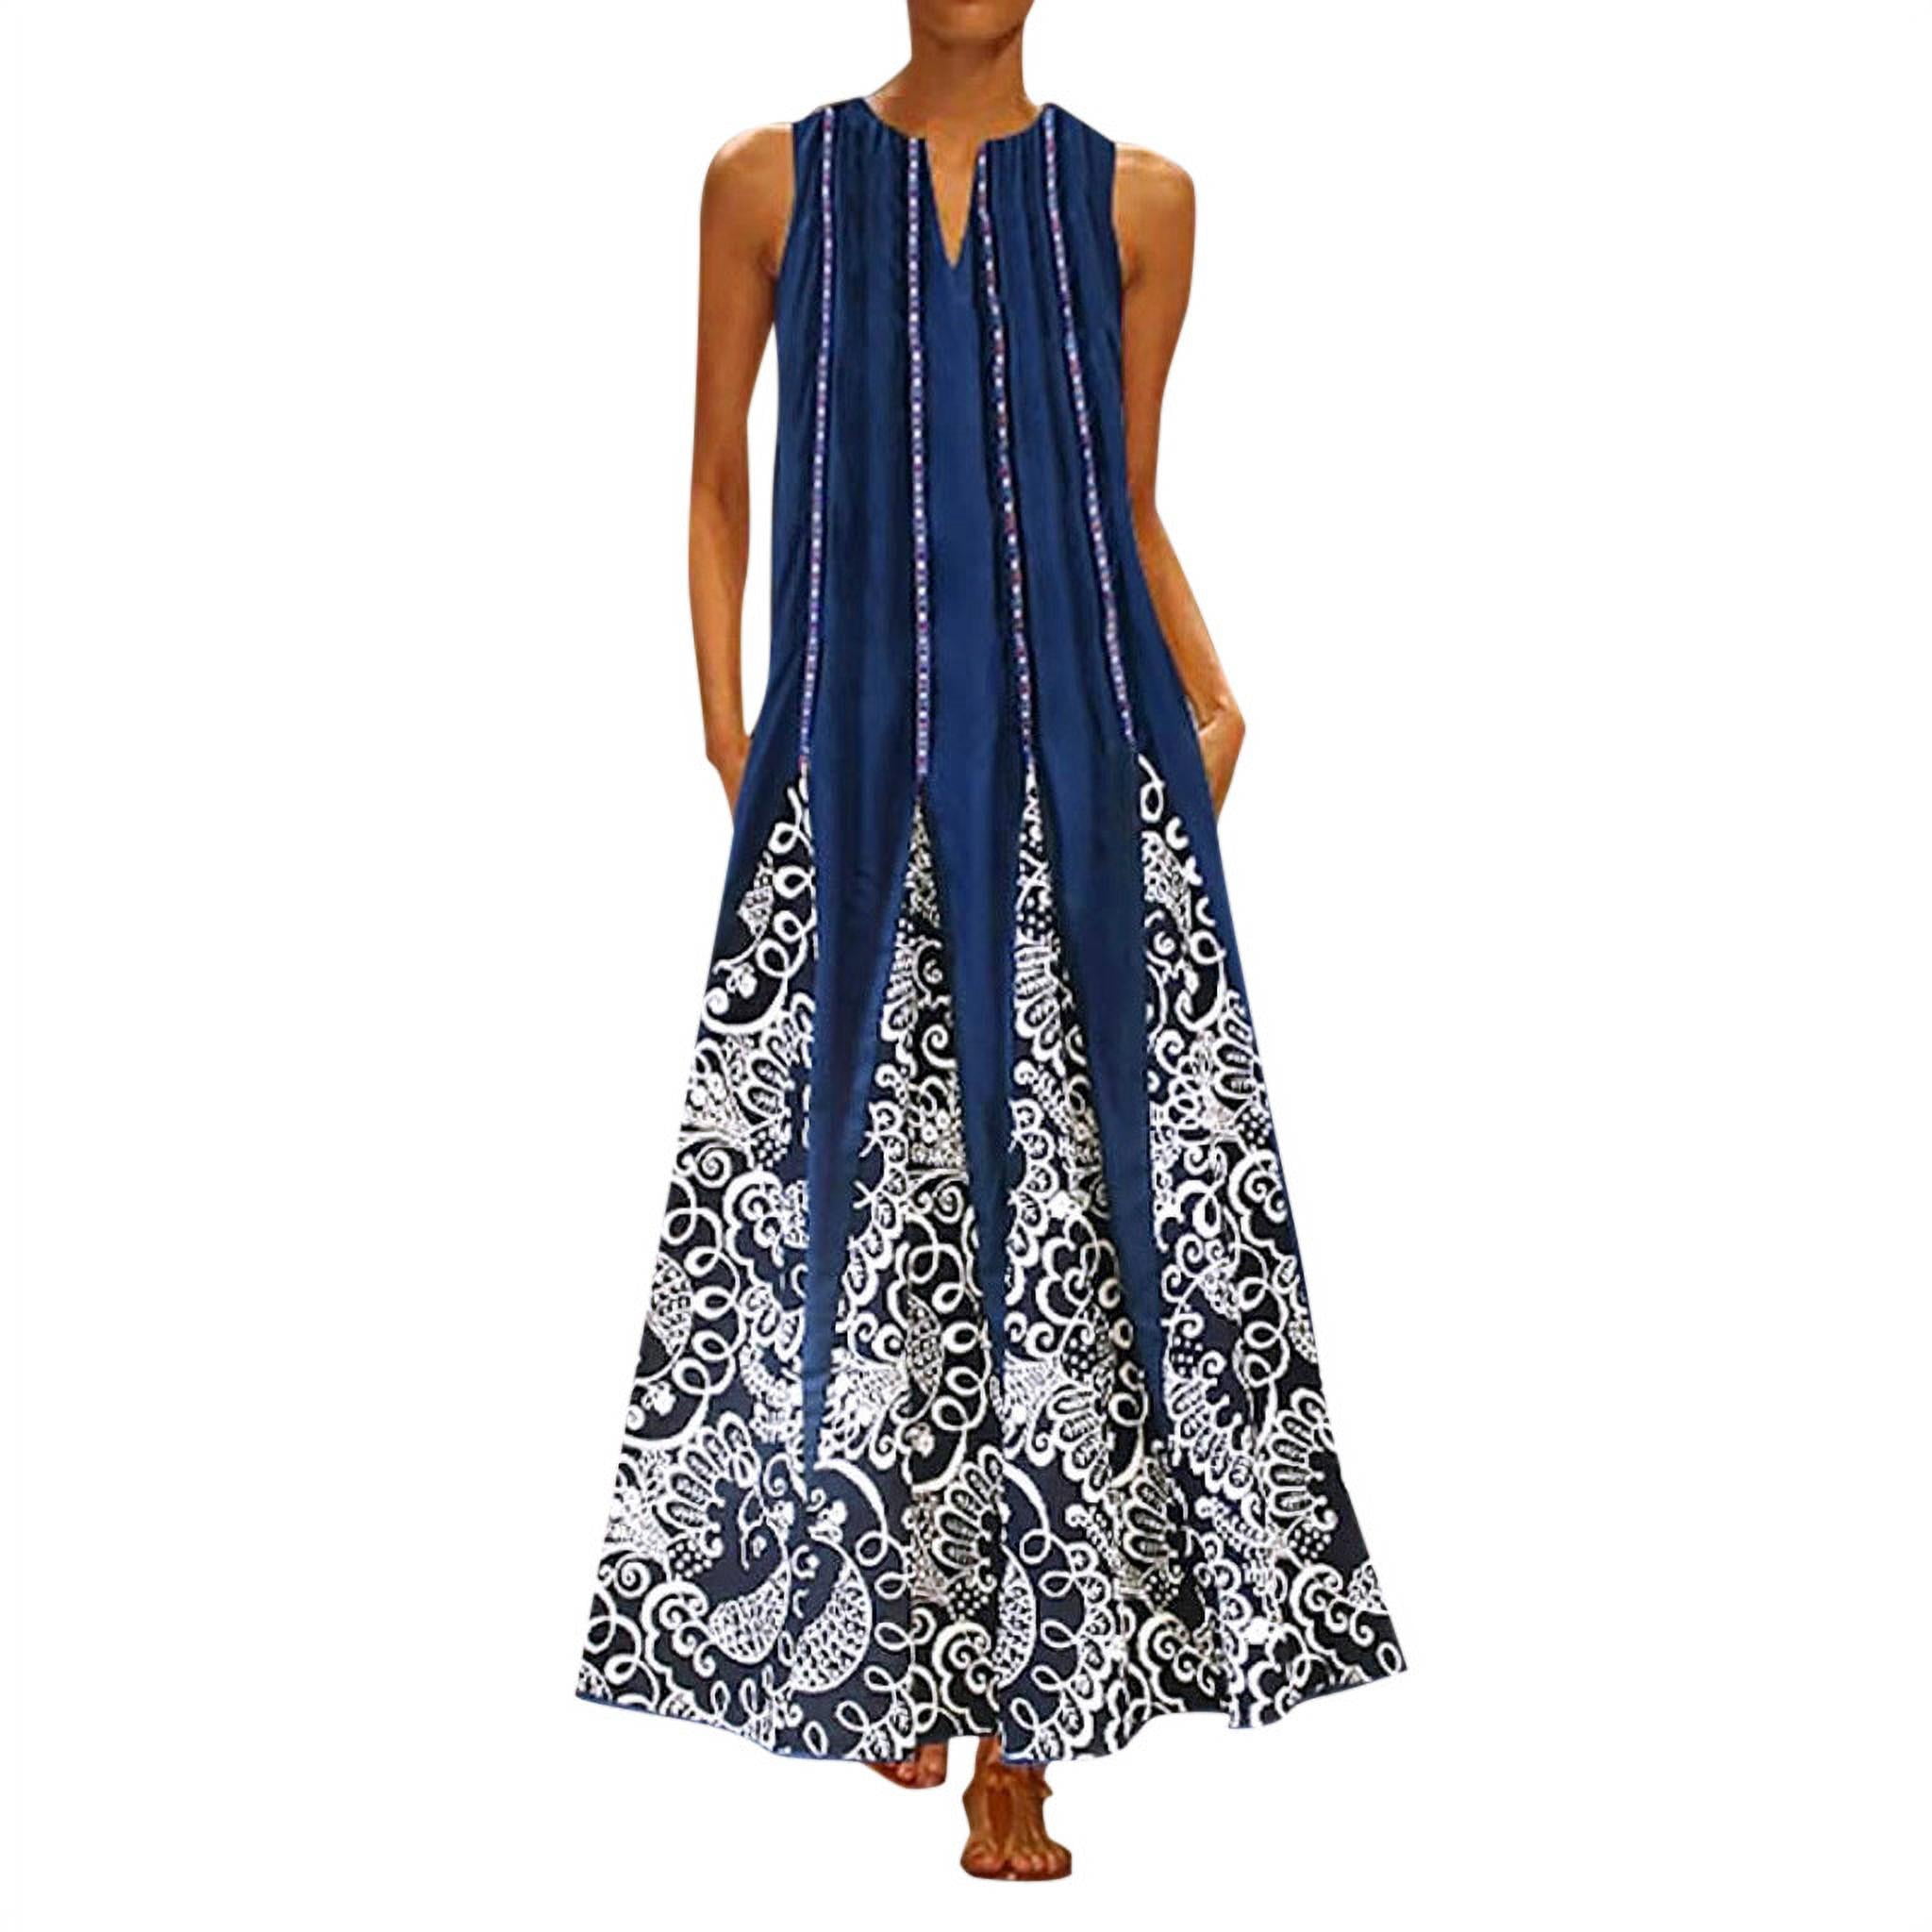 TAIAOJING Women's Summer Dress Plus Size Print Casual Sleeveless ...